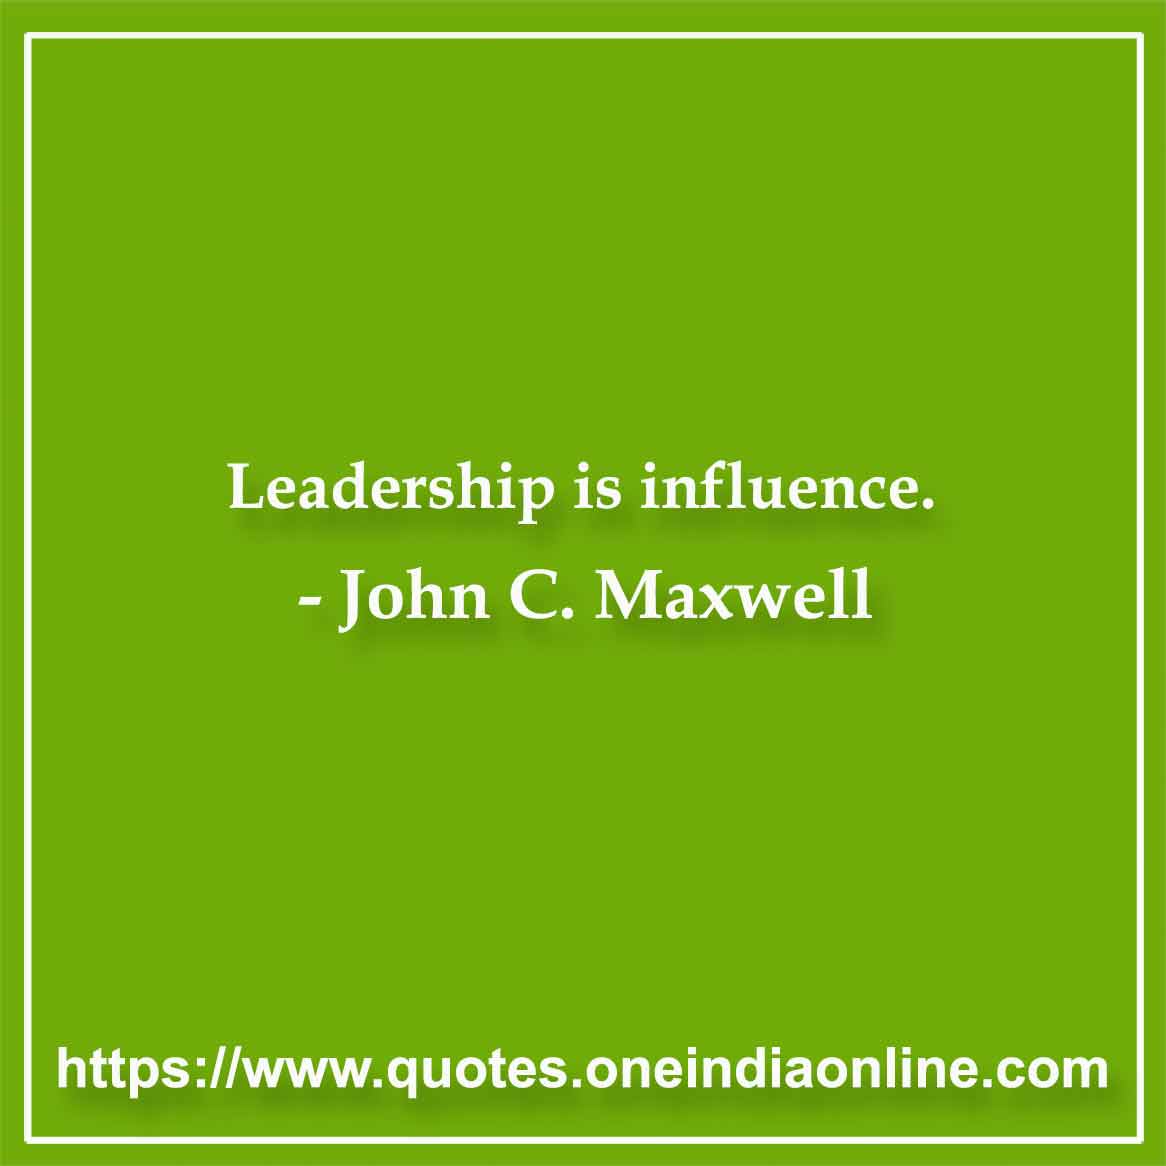 Leadership is influence.

- John C. Maxwell